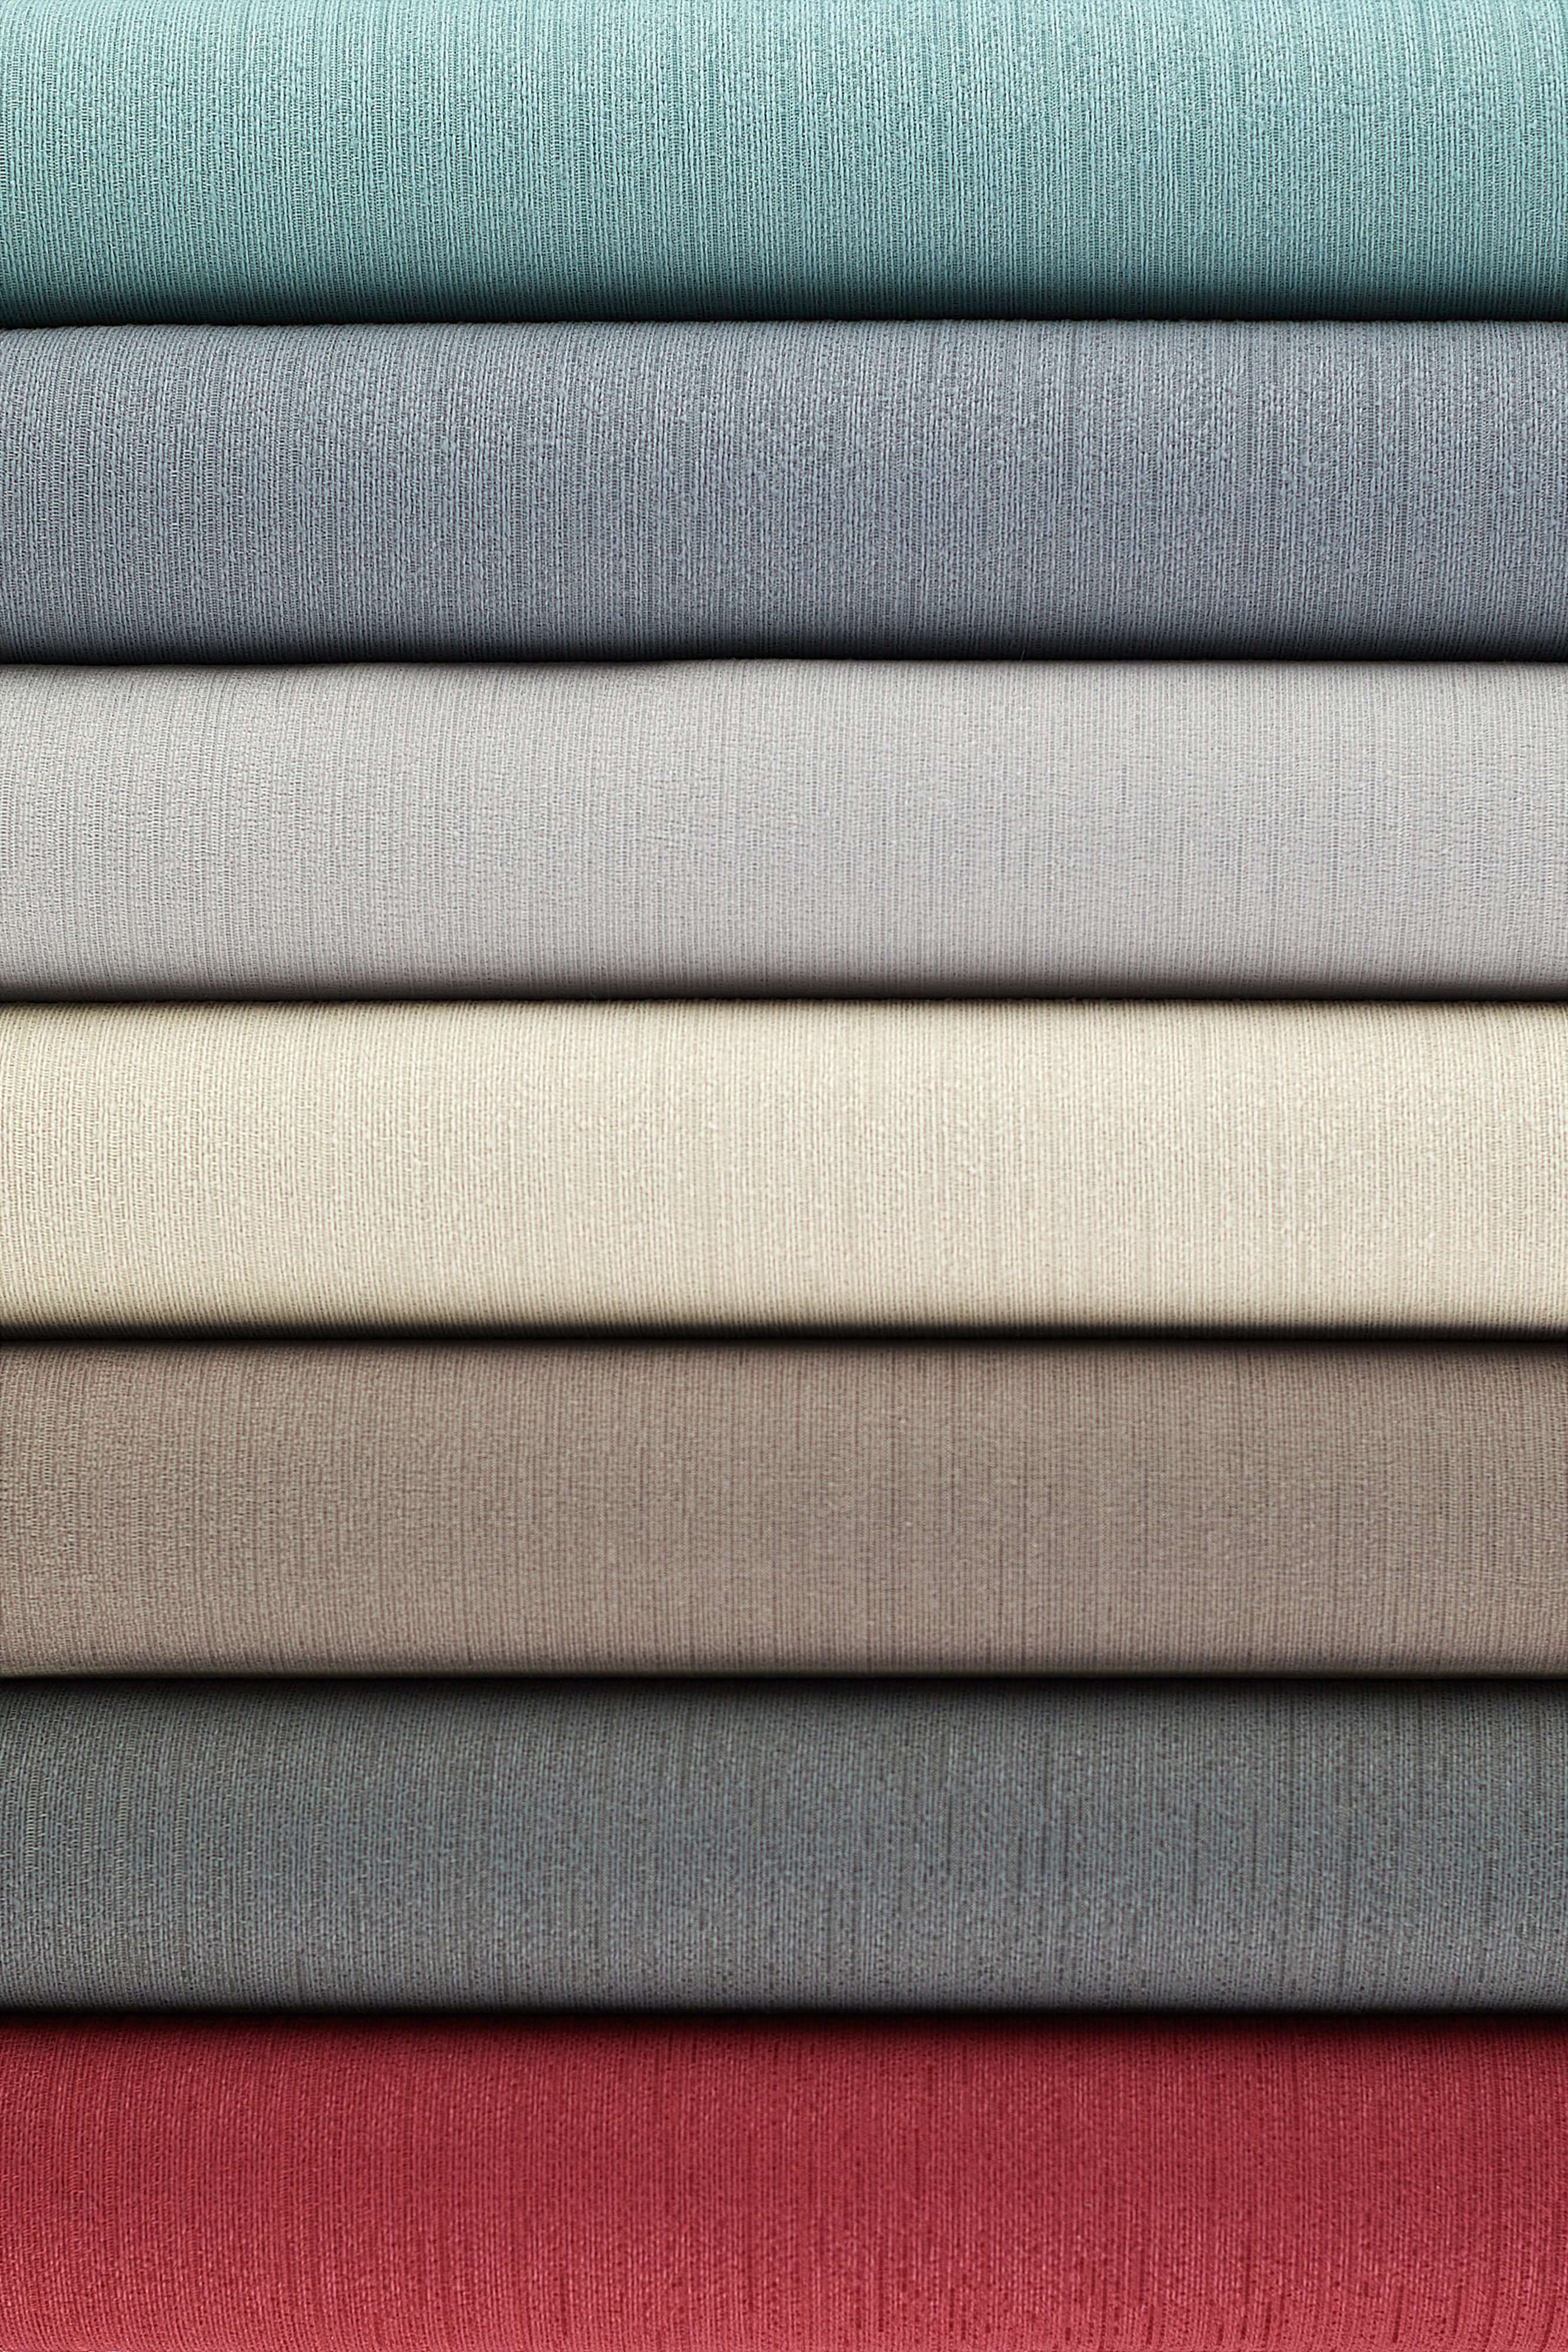 McAlister Textiles Sakai Graphite FR Plain Fabric Fabrics 